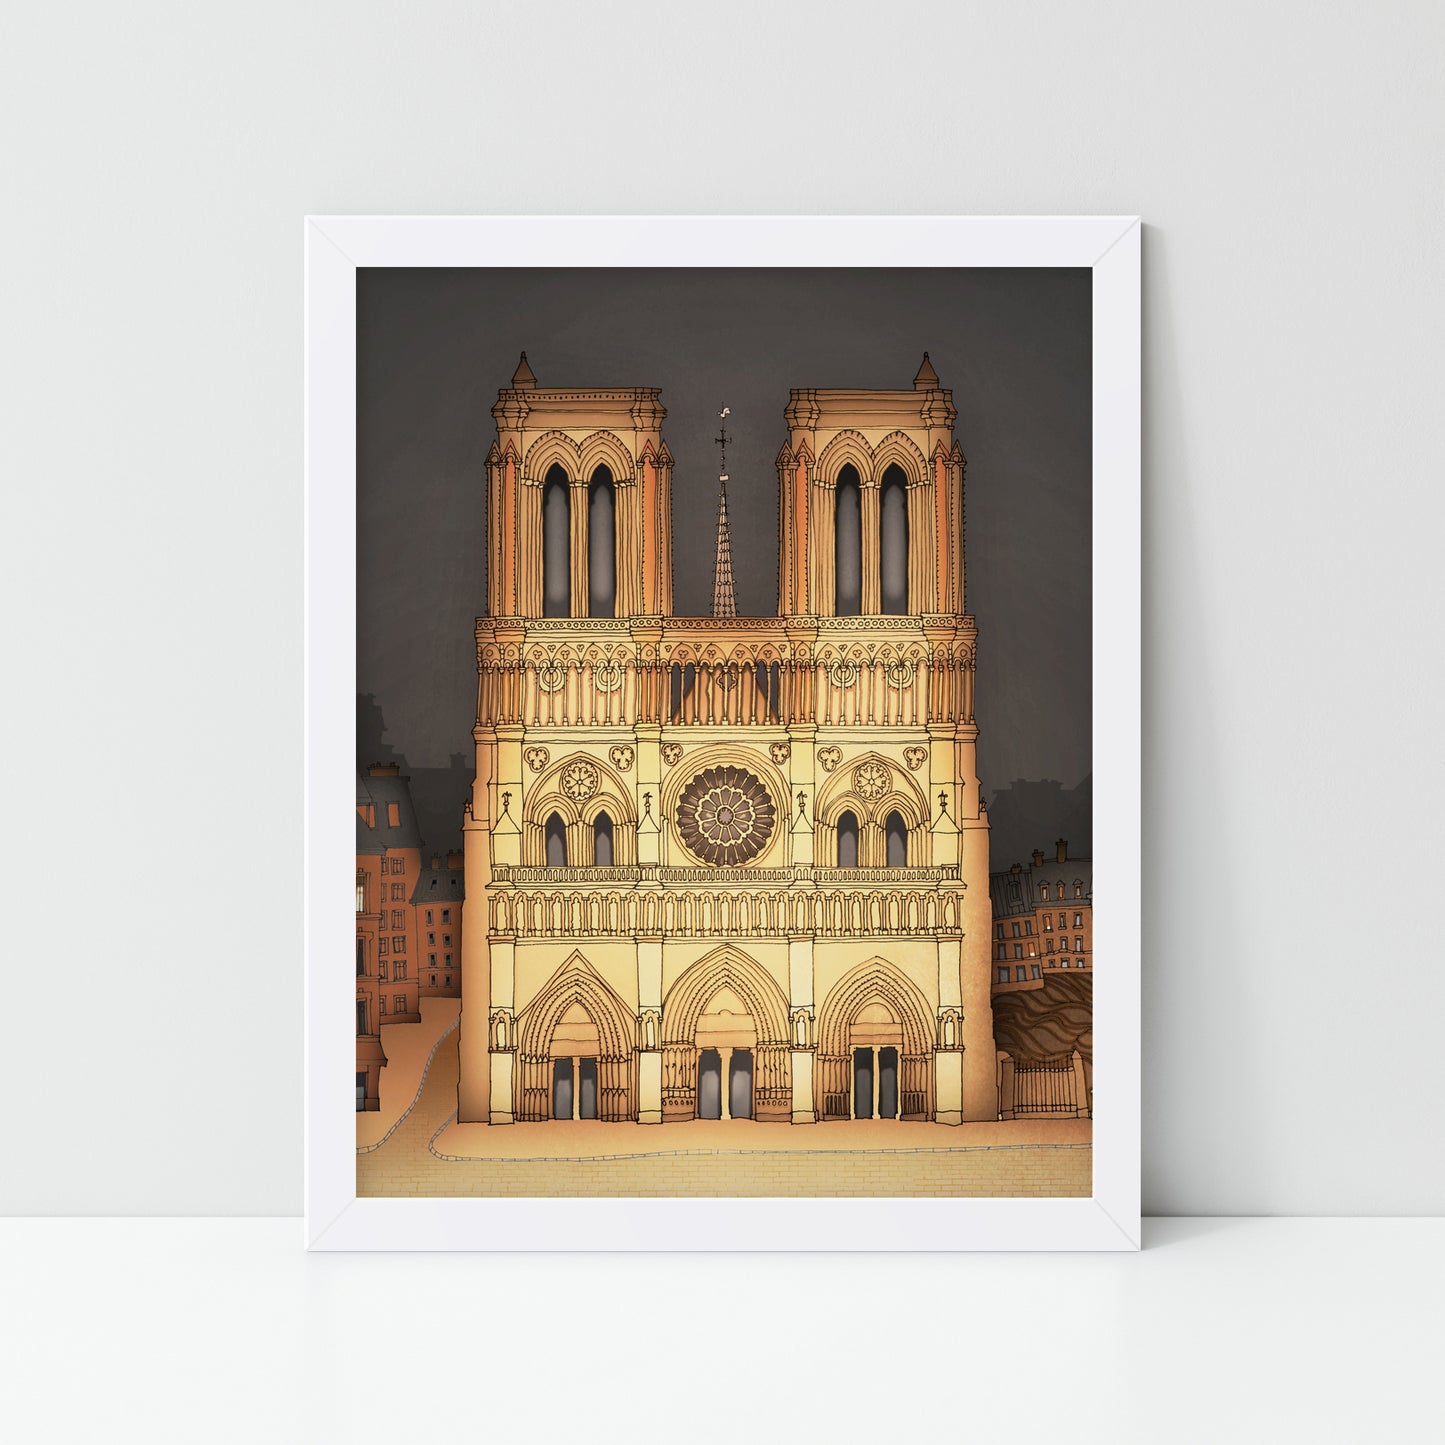 The Notre Dame in Paris - Framed Art Print